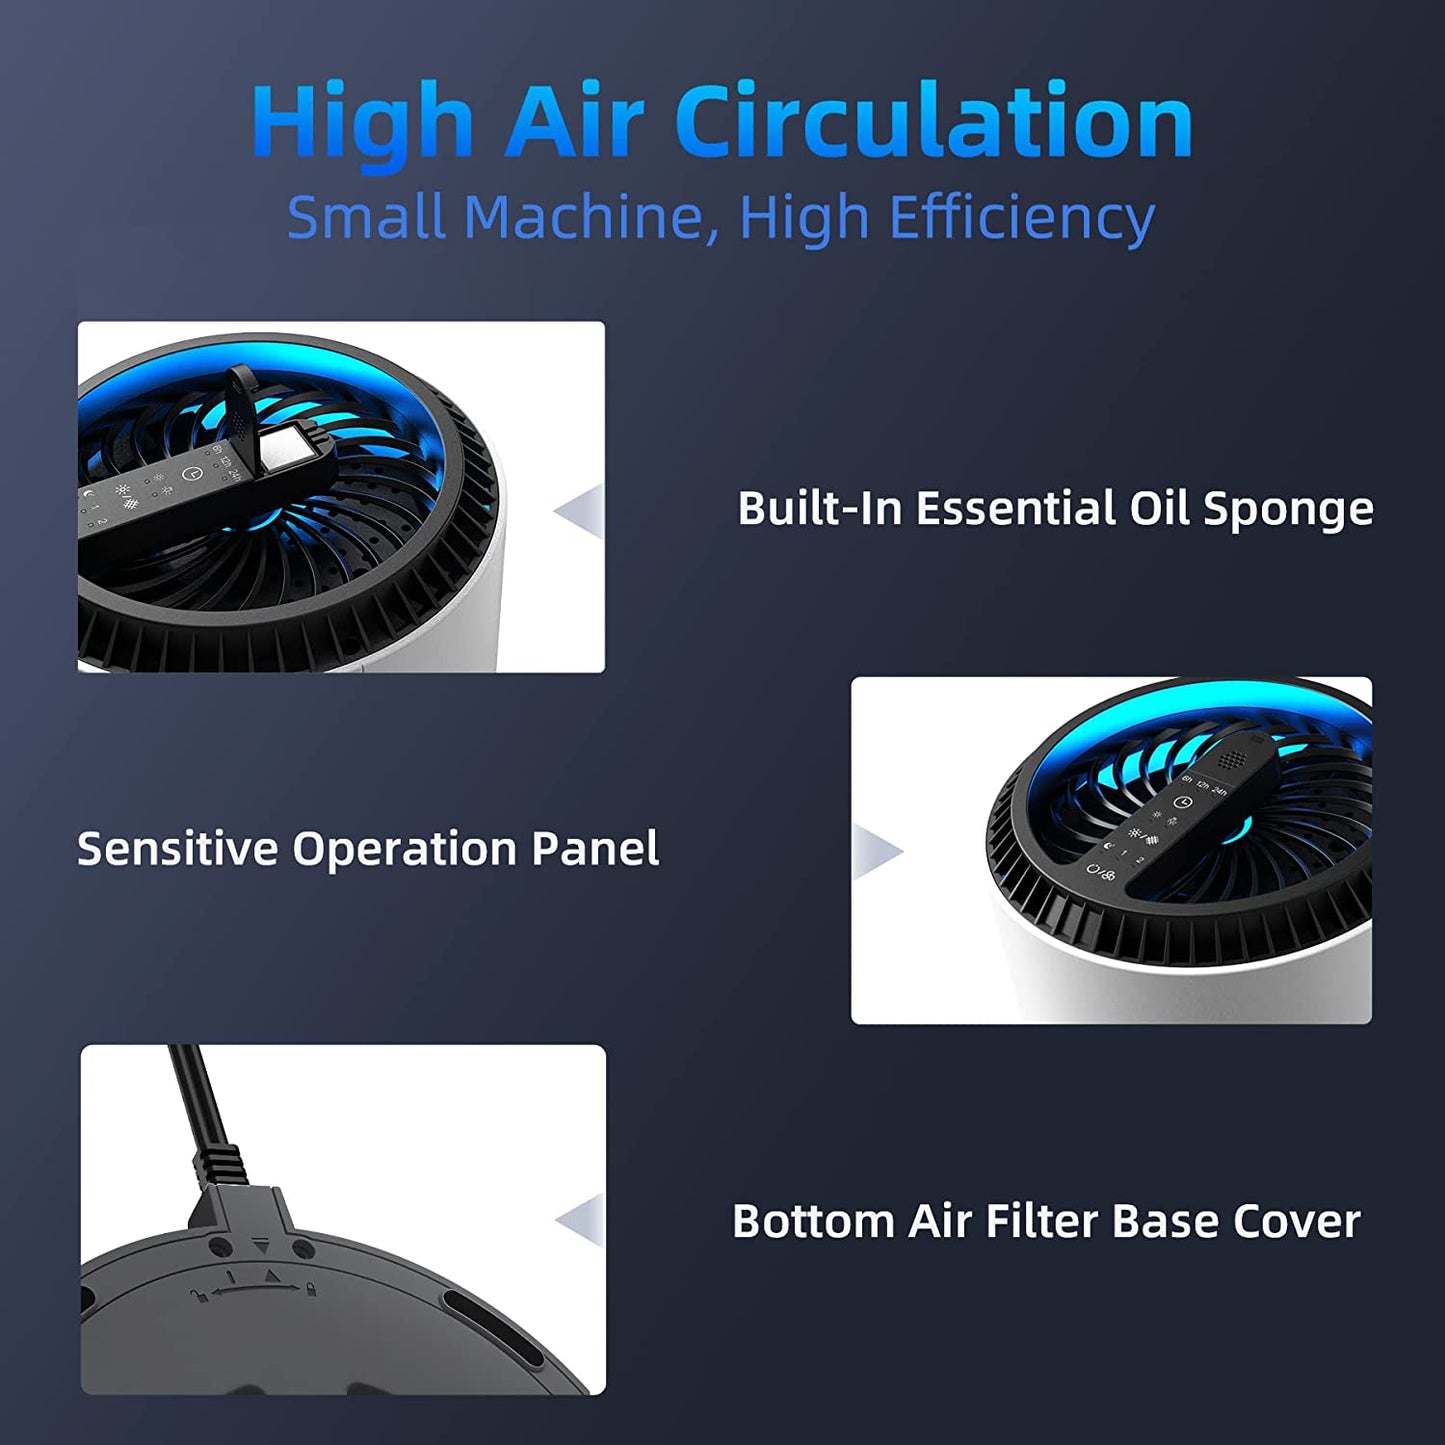 HEPA Air Purifier MK01 - Quiet Air Cleaner - Growing Apex Home, Sweet Home